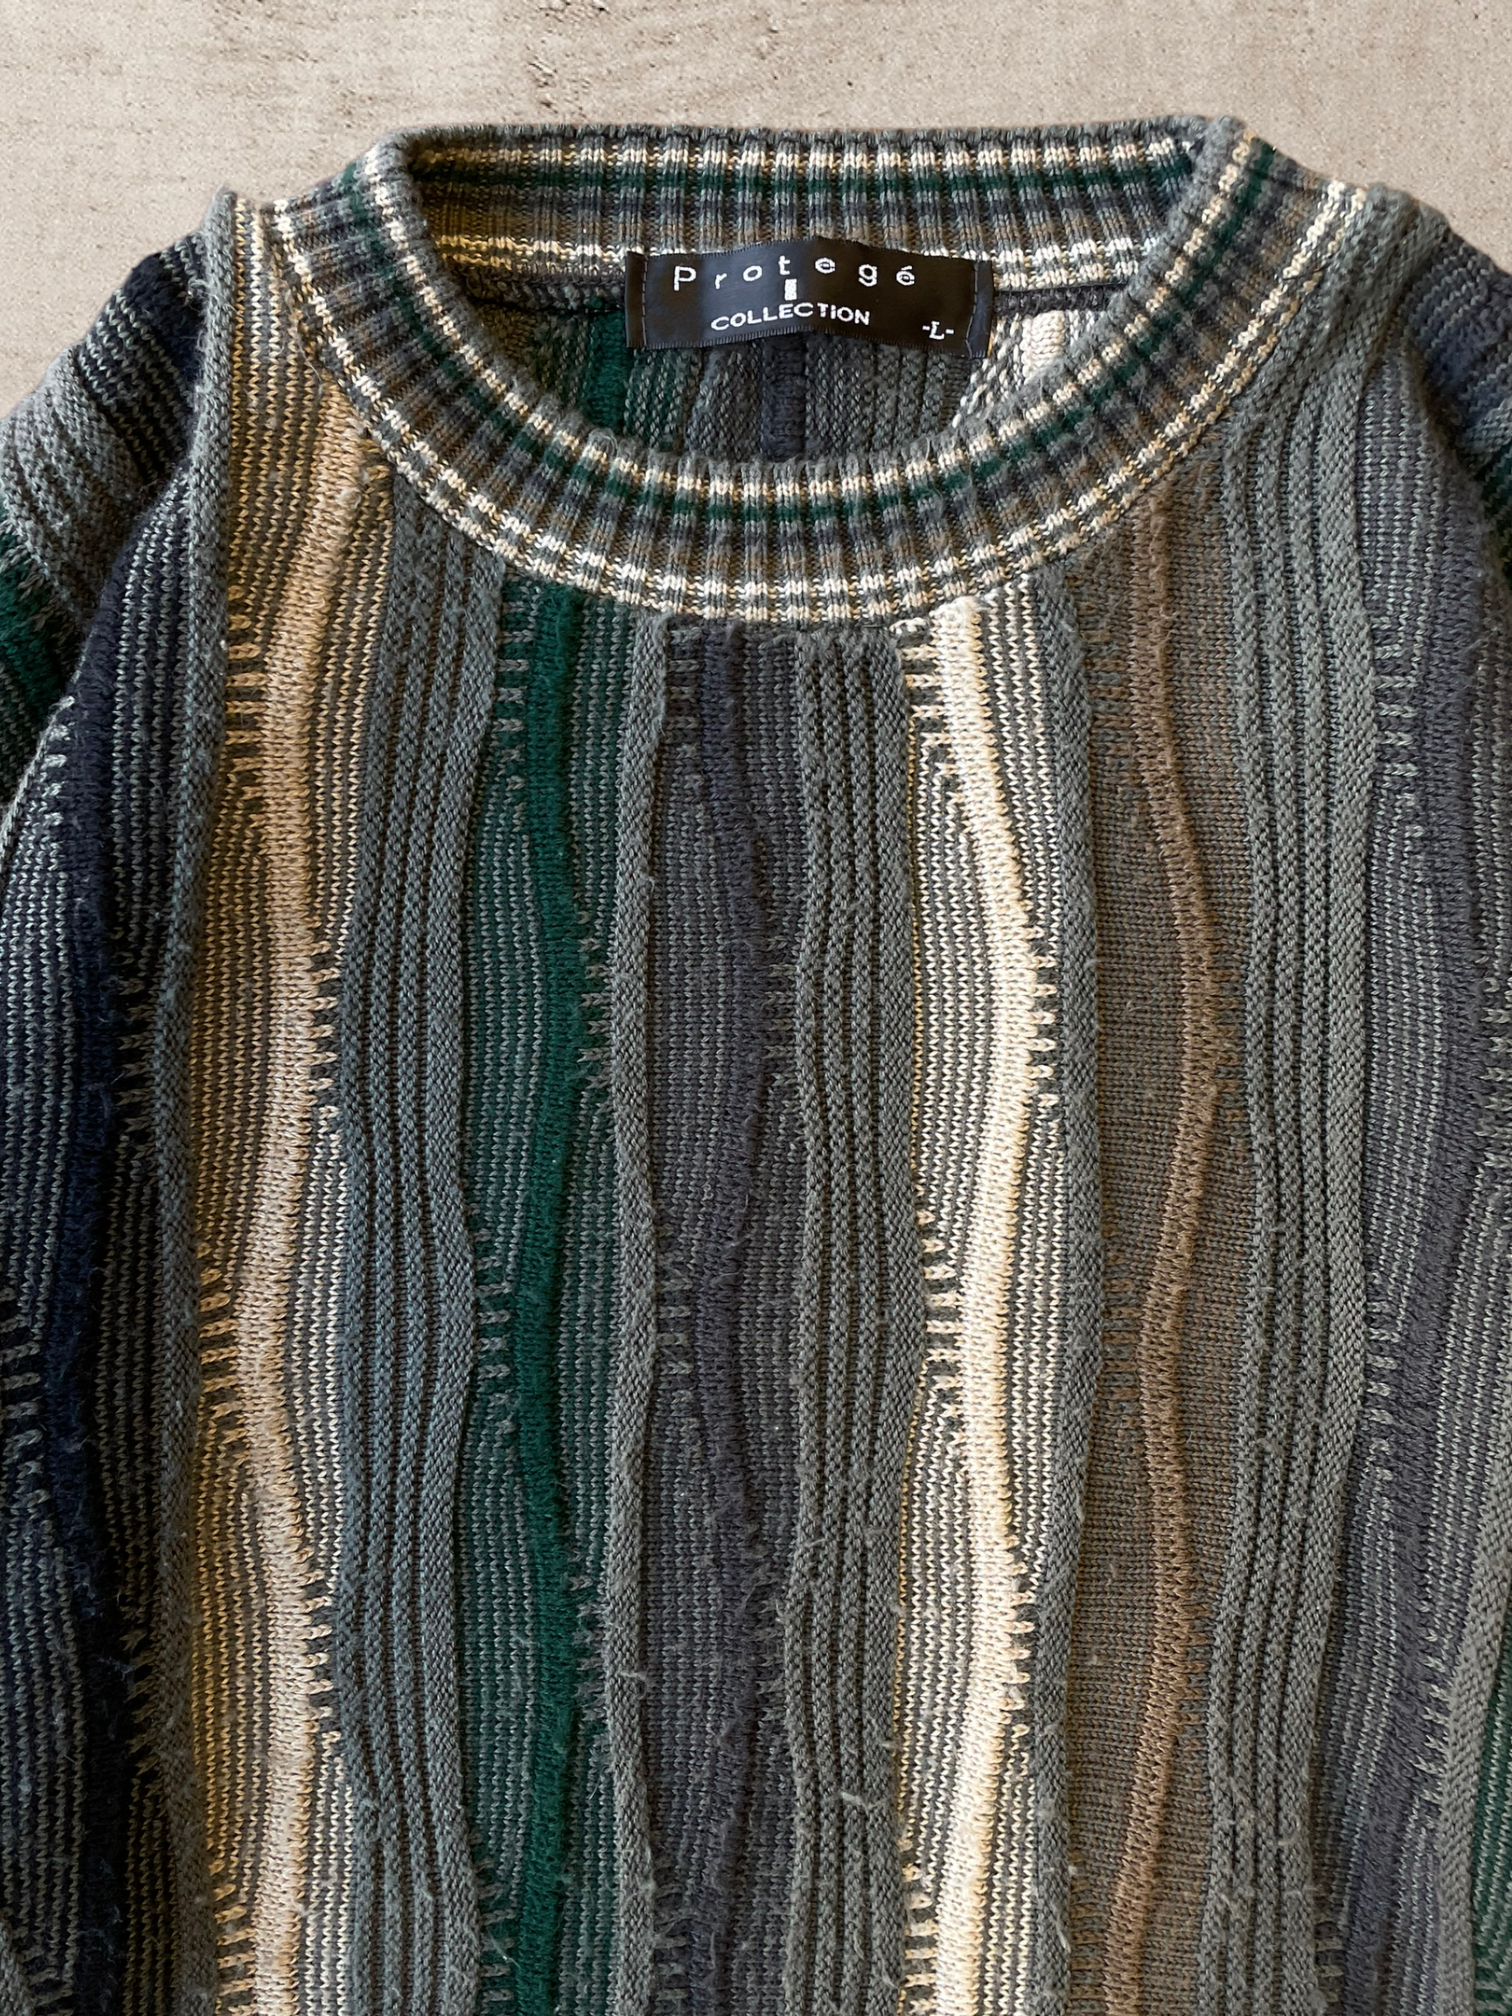 90s Multicolored Knit Protegé Sweater - Large